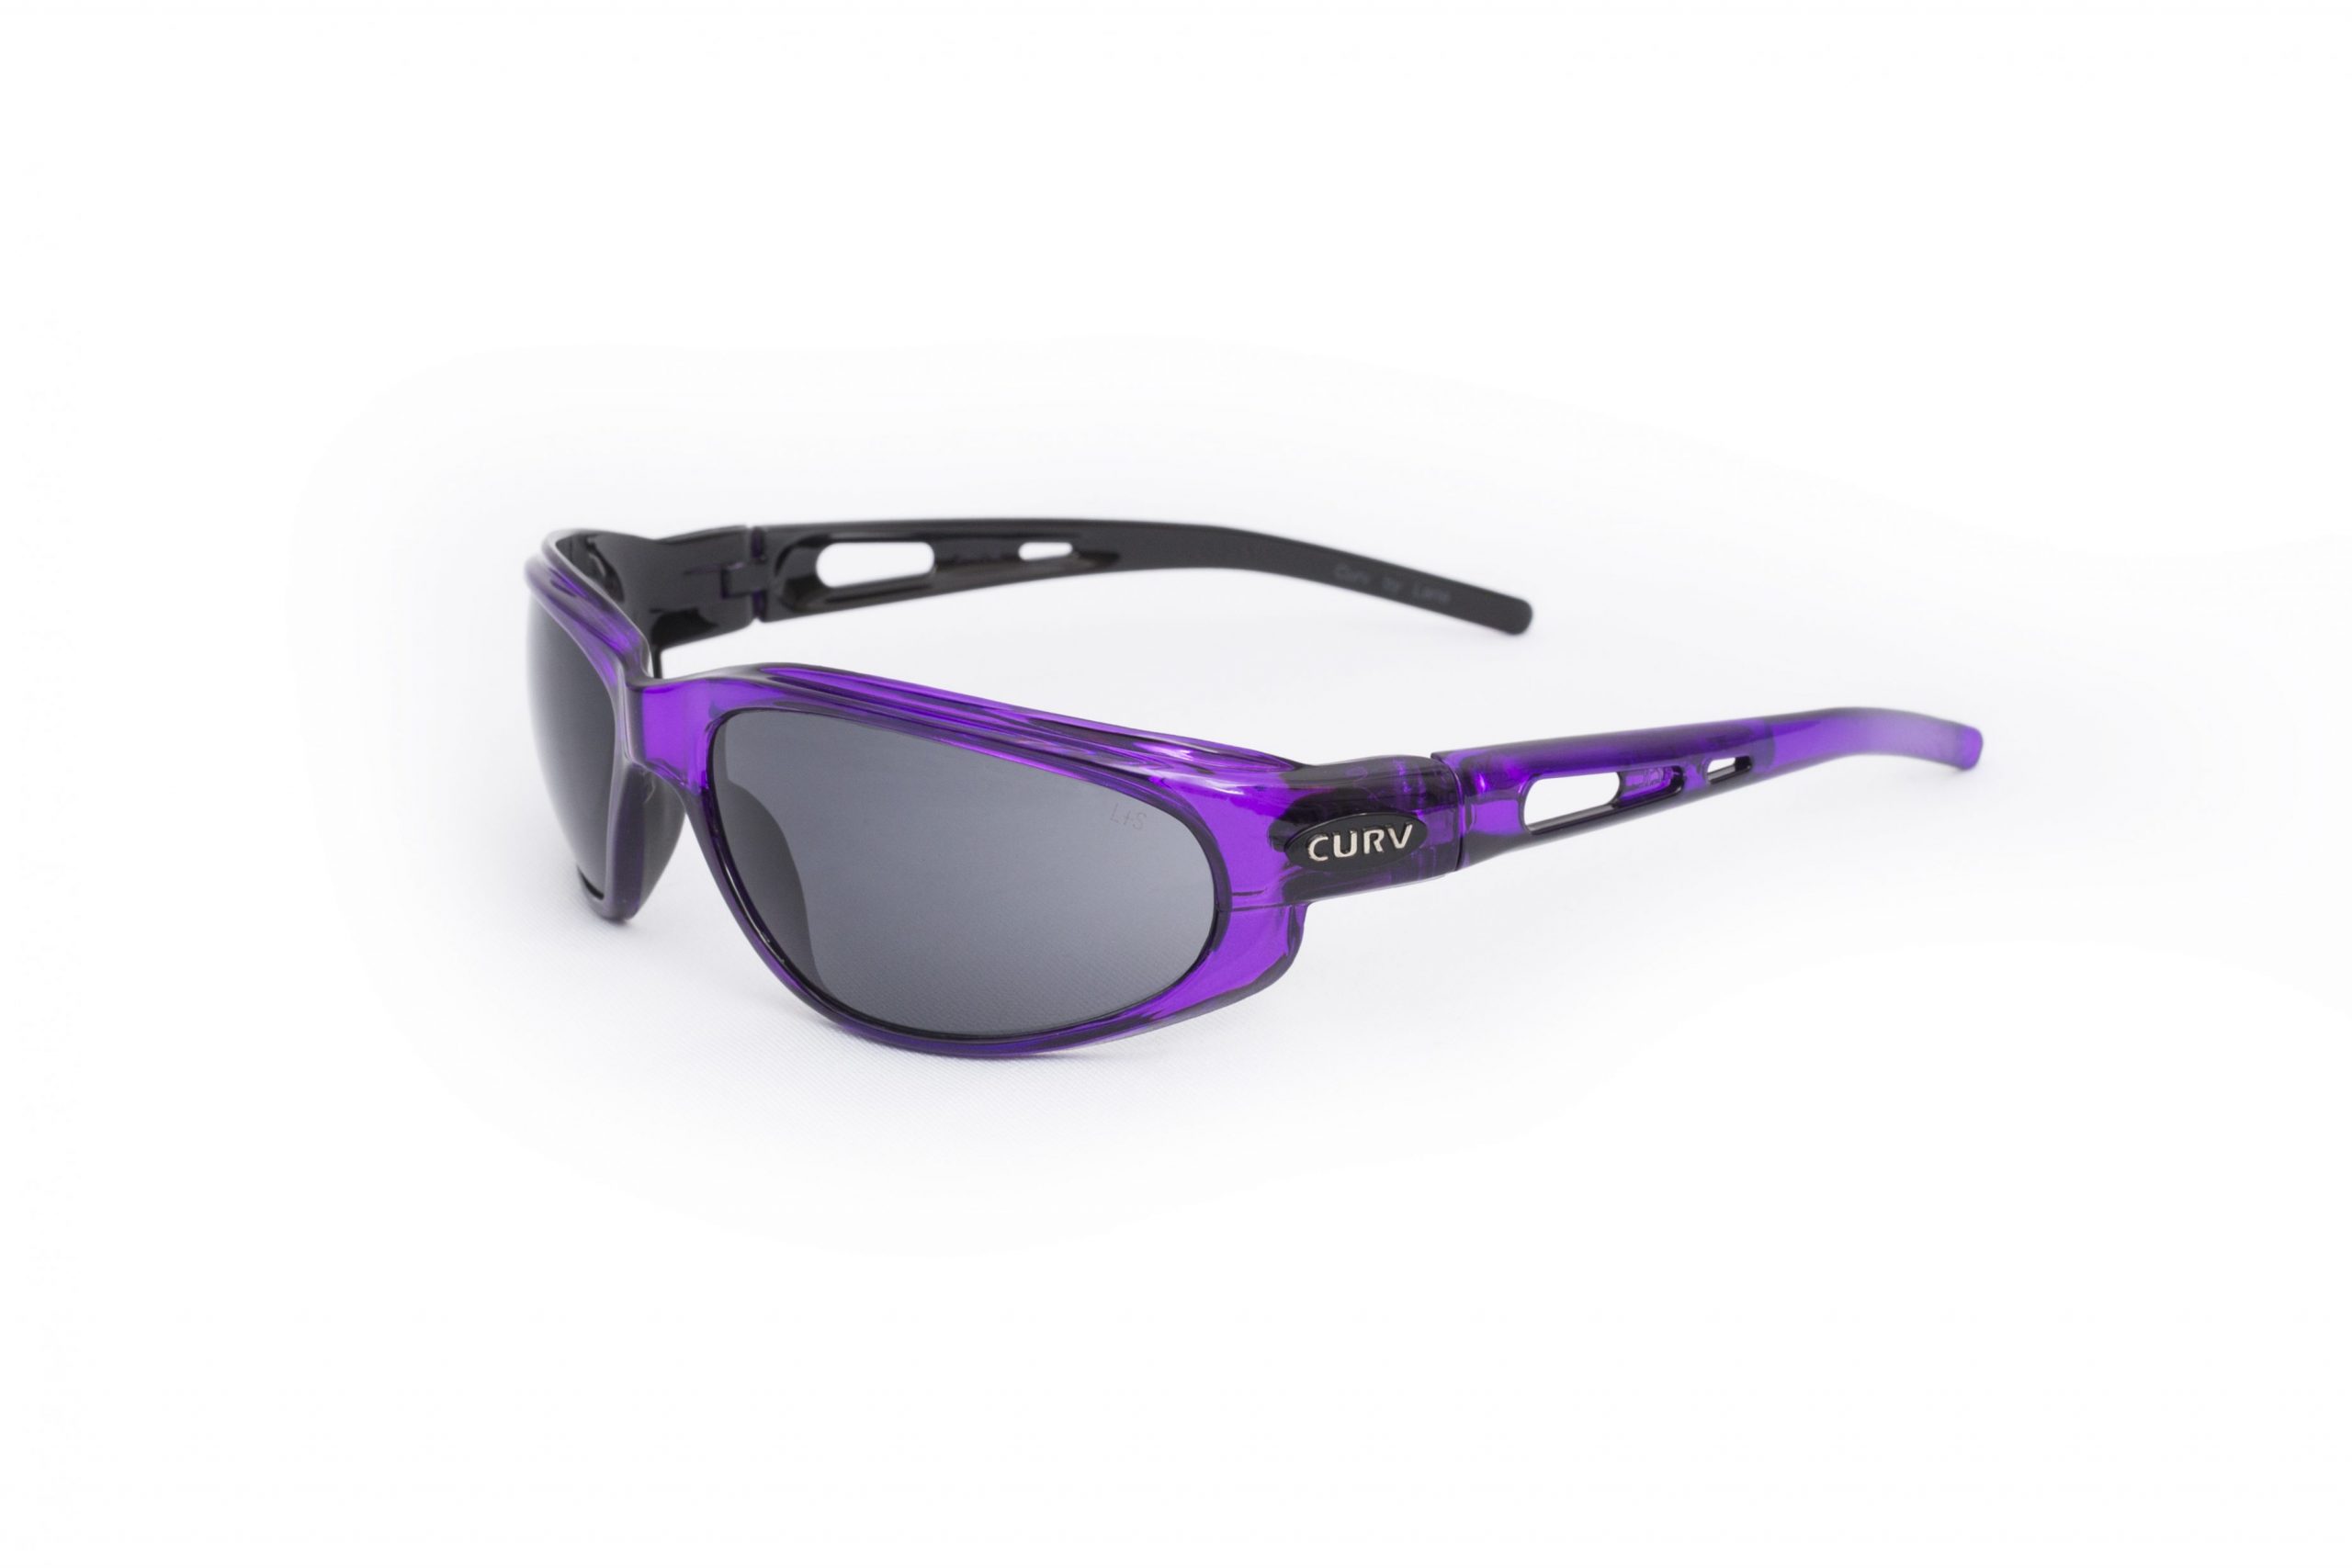 01-16 Purple motorcycle riding sunglasses